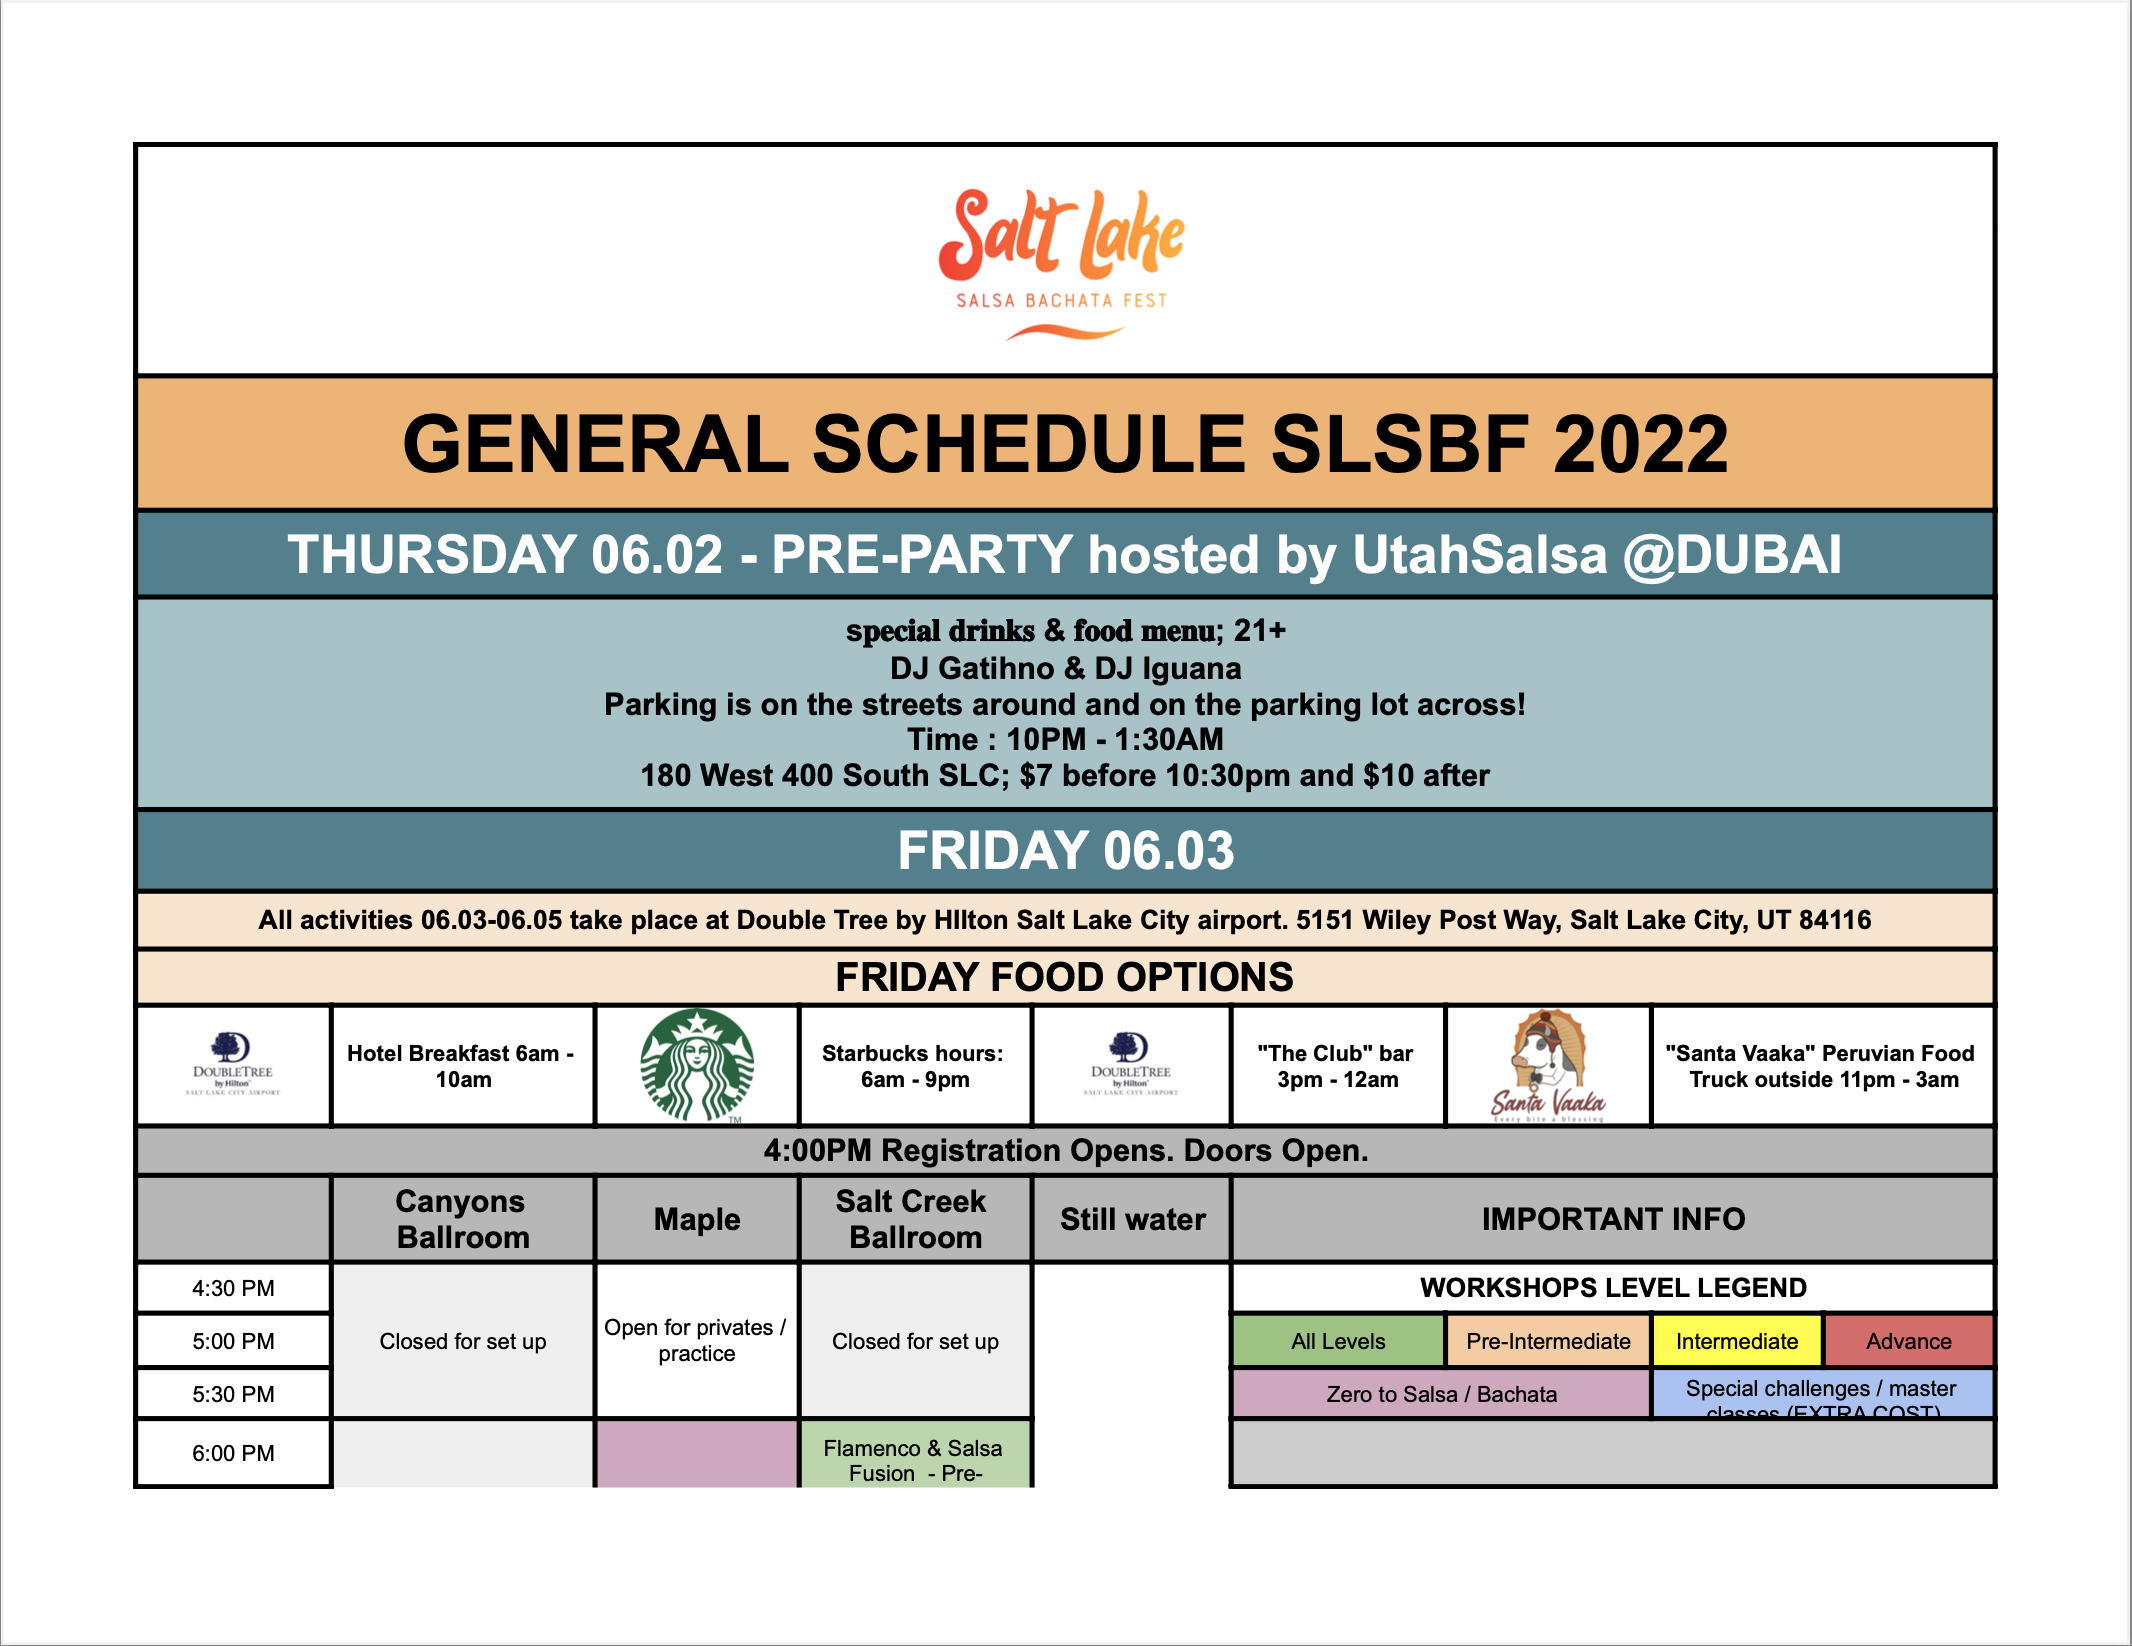 Full Schedule at Salt Lake Salsa Bachata Fest